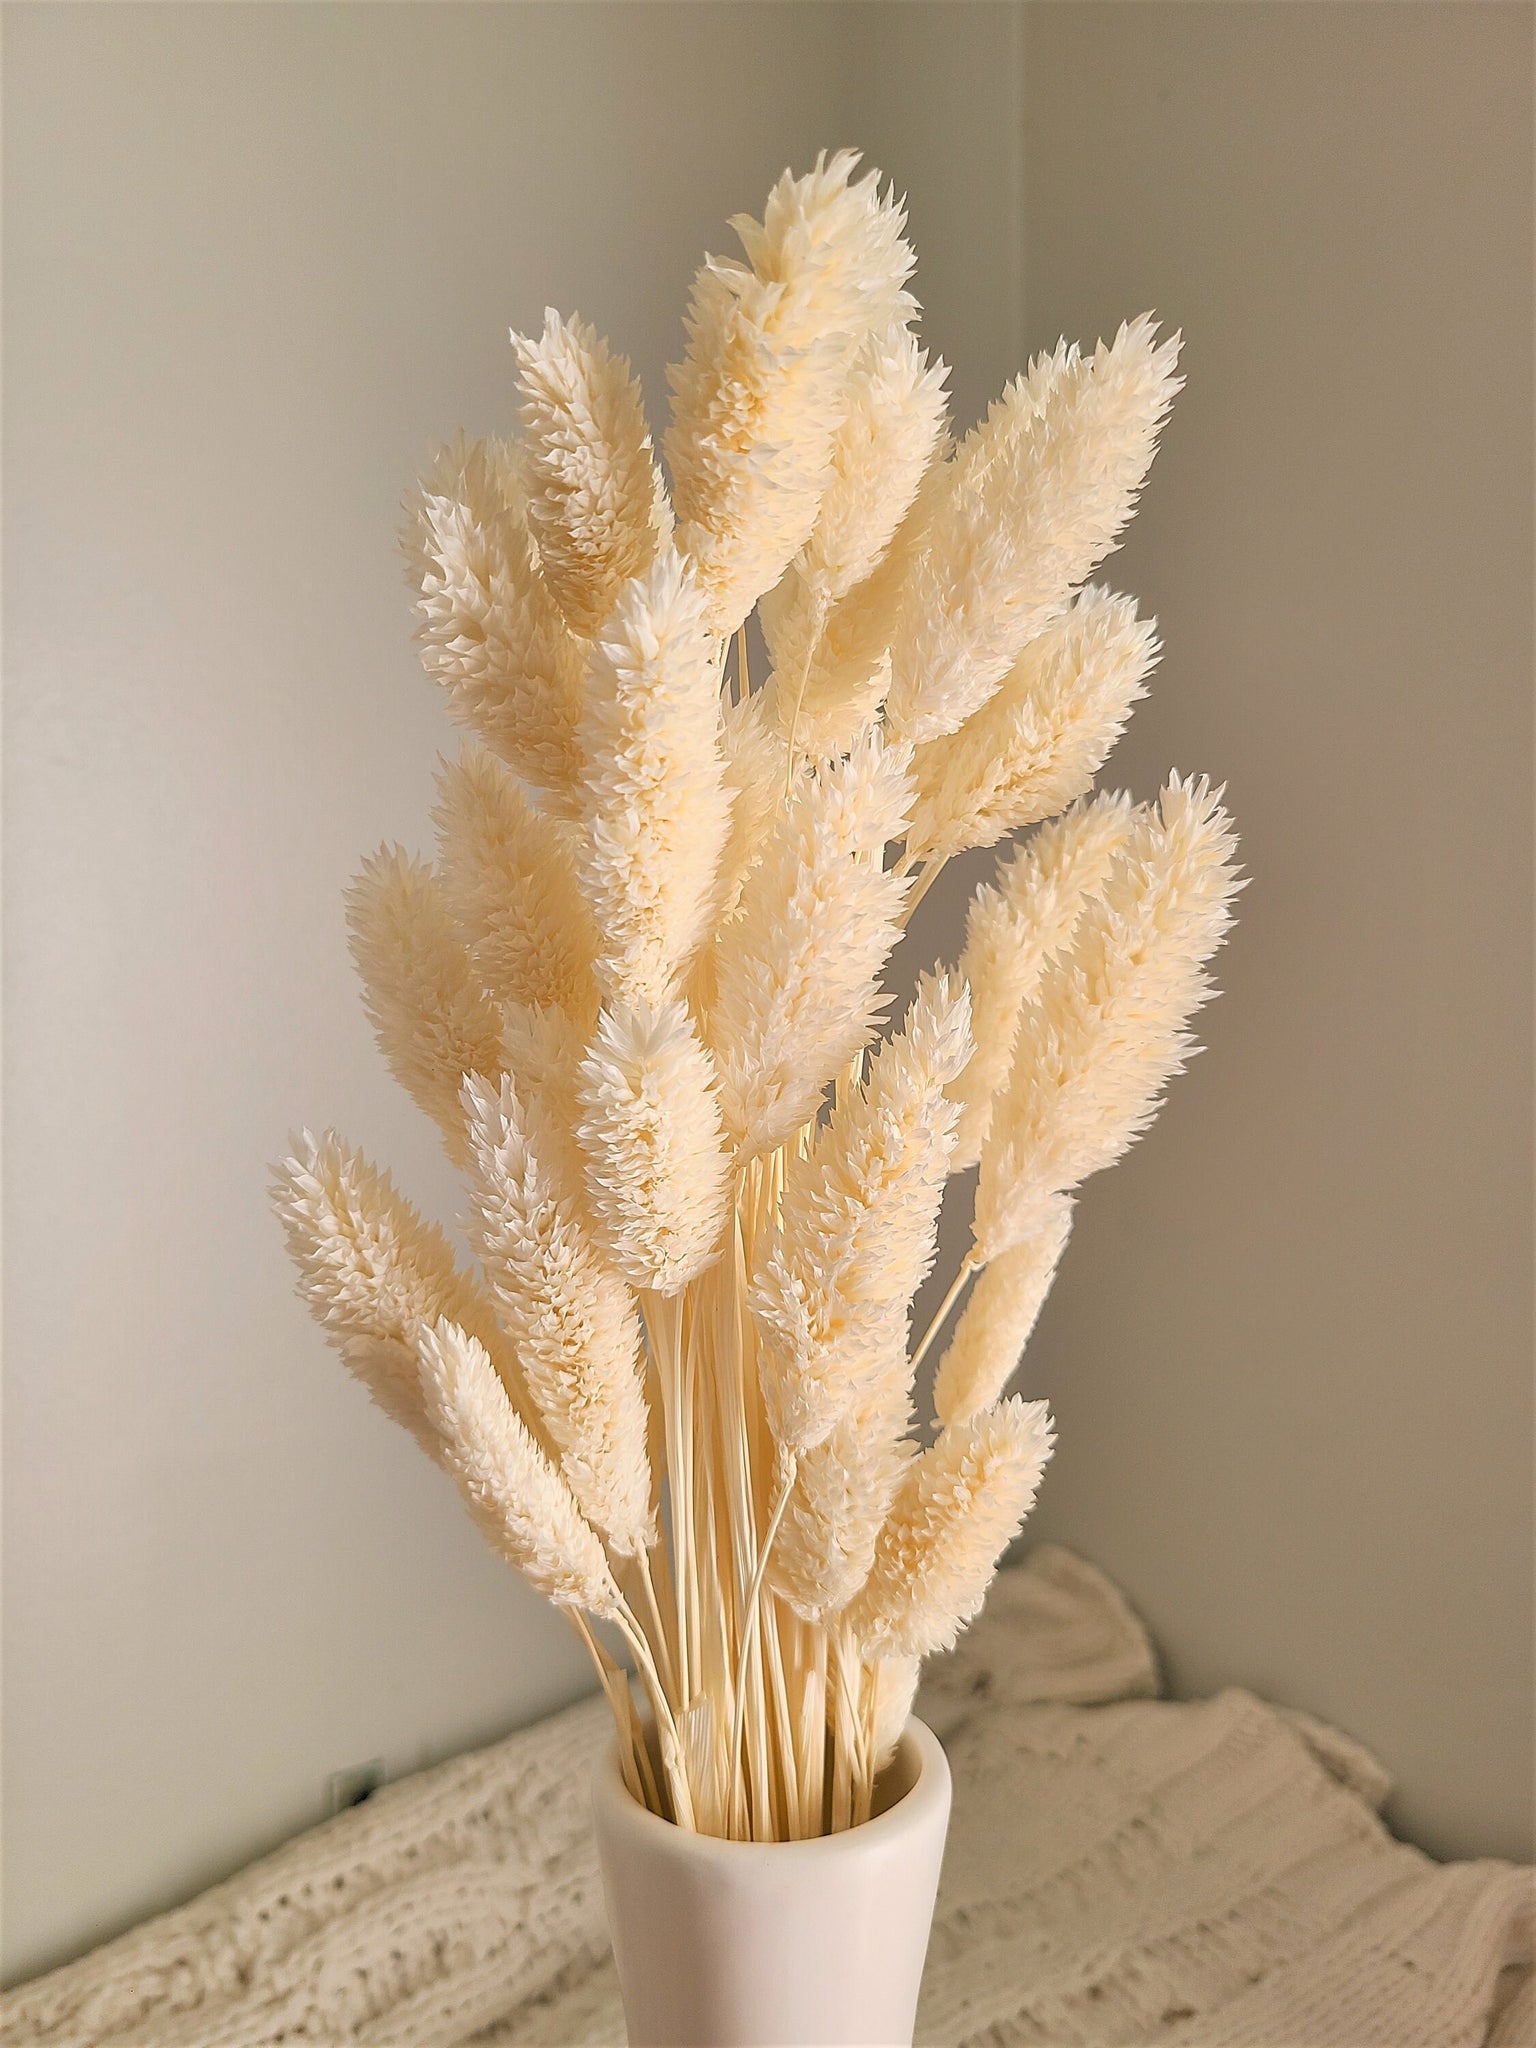 Ivory/ Cream Phalaris- Textured Bunny Tails - Phalaris Grass Tails - Canary Grass - Gem Grass